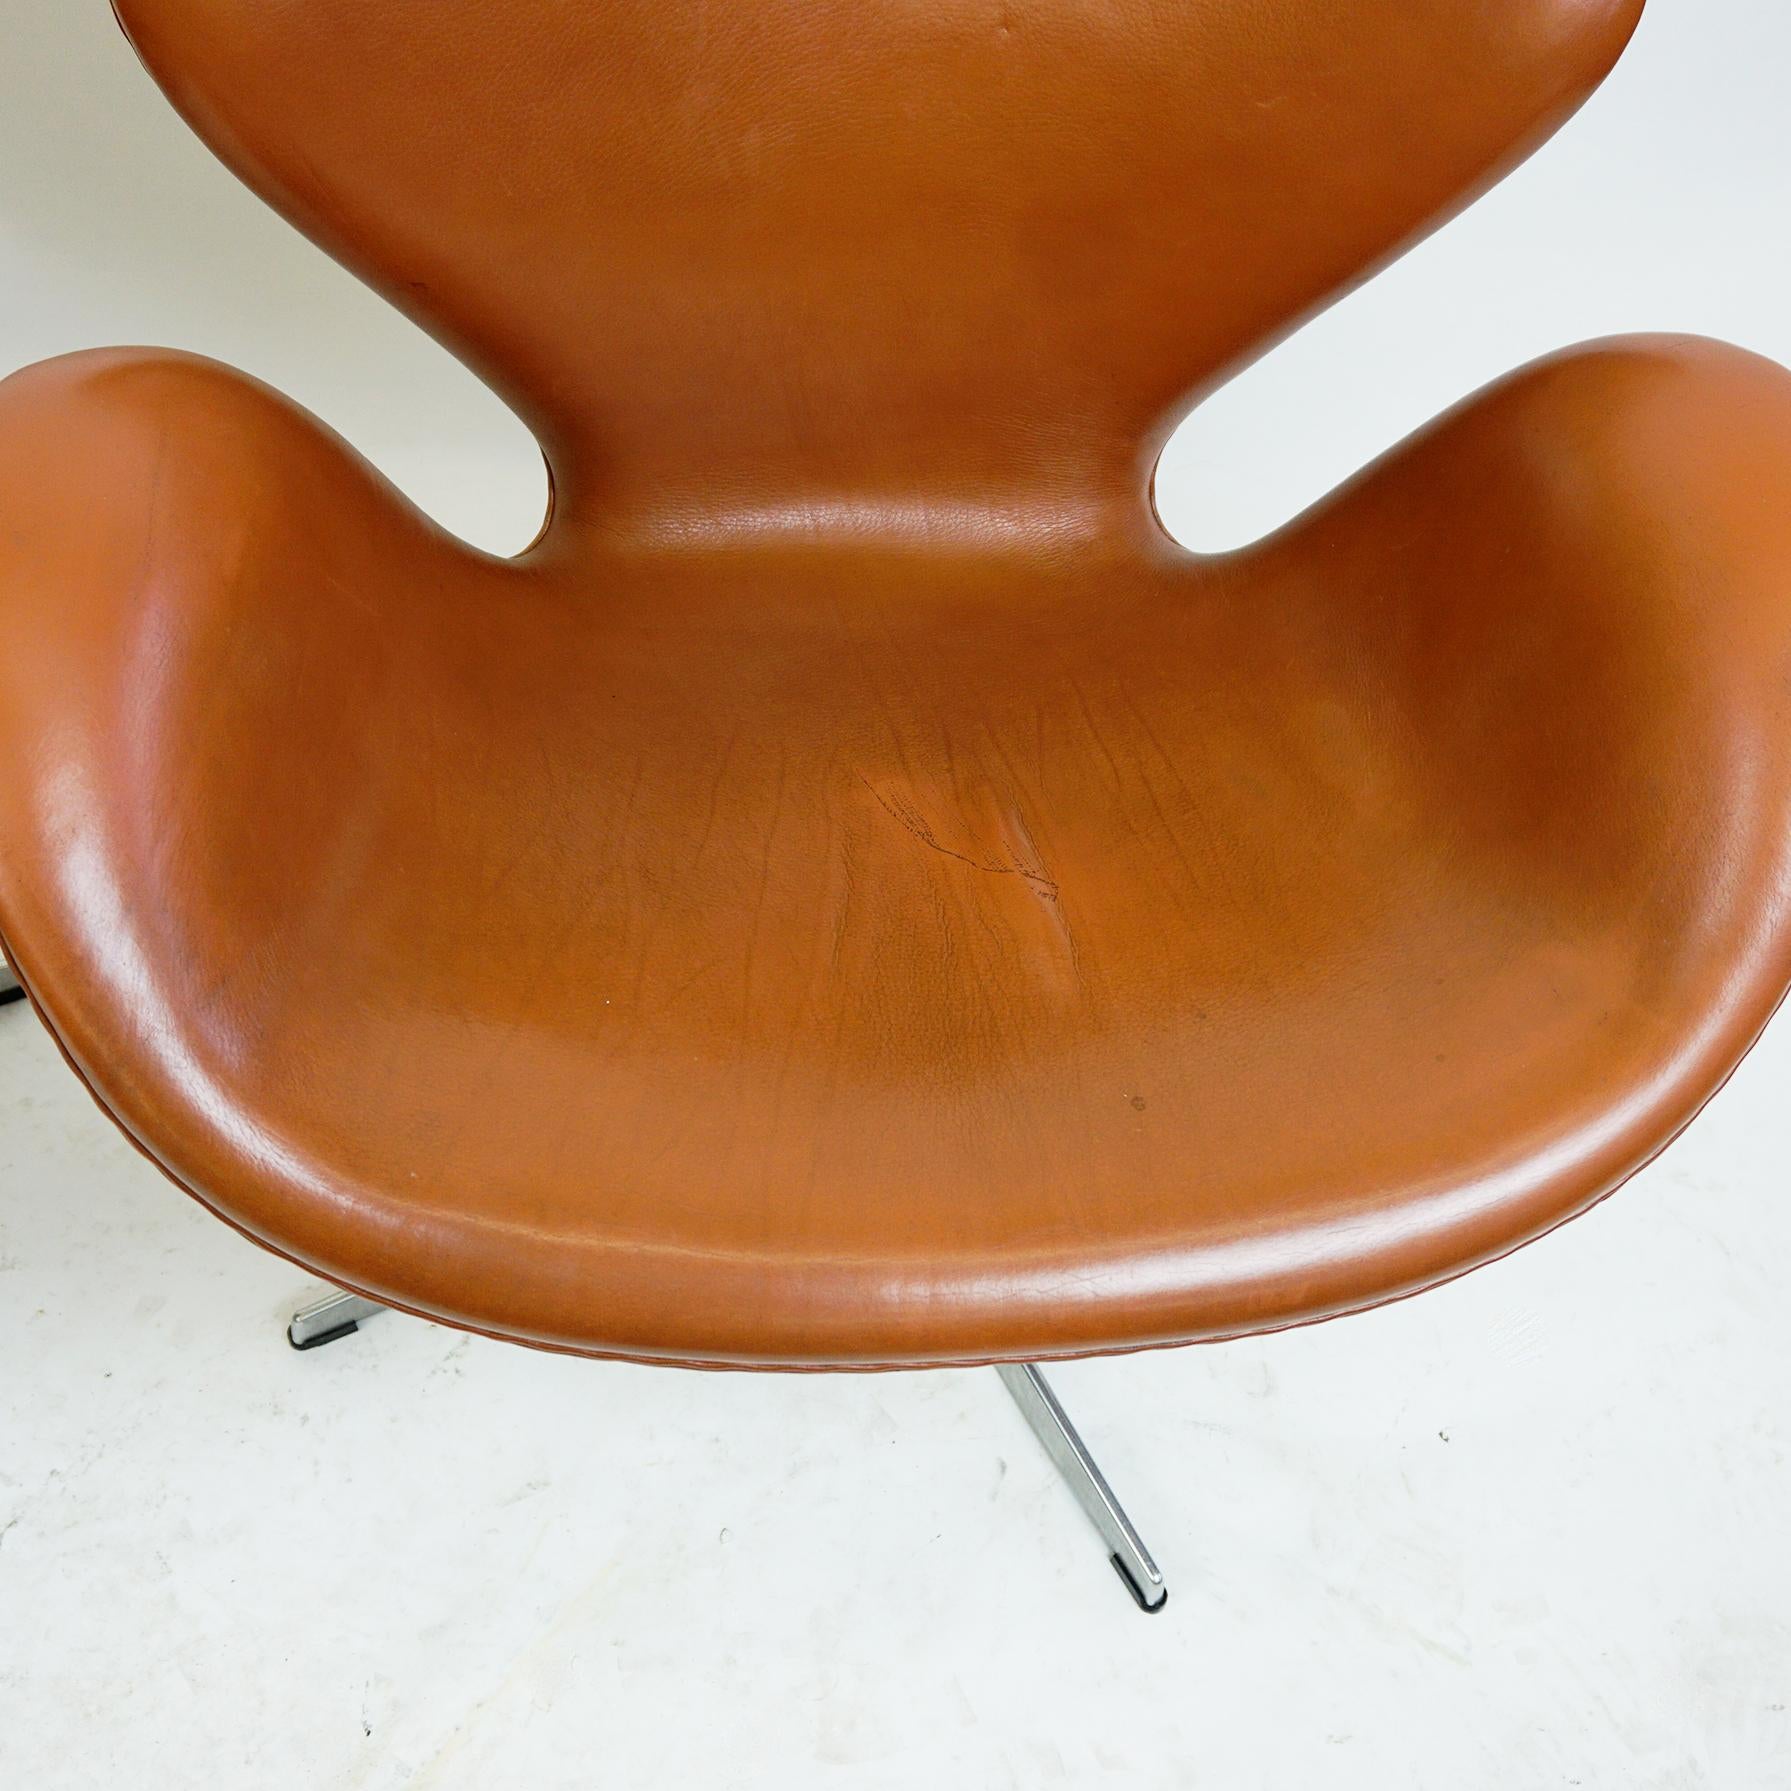 Scandinaviaan Brown Leather Swan Chair by Arne Jacobsen for Fritz Hansen Denmark For Sale 3